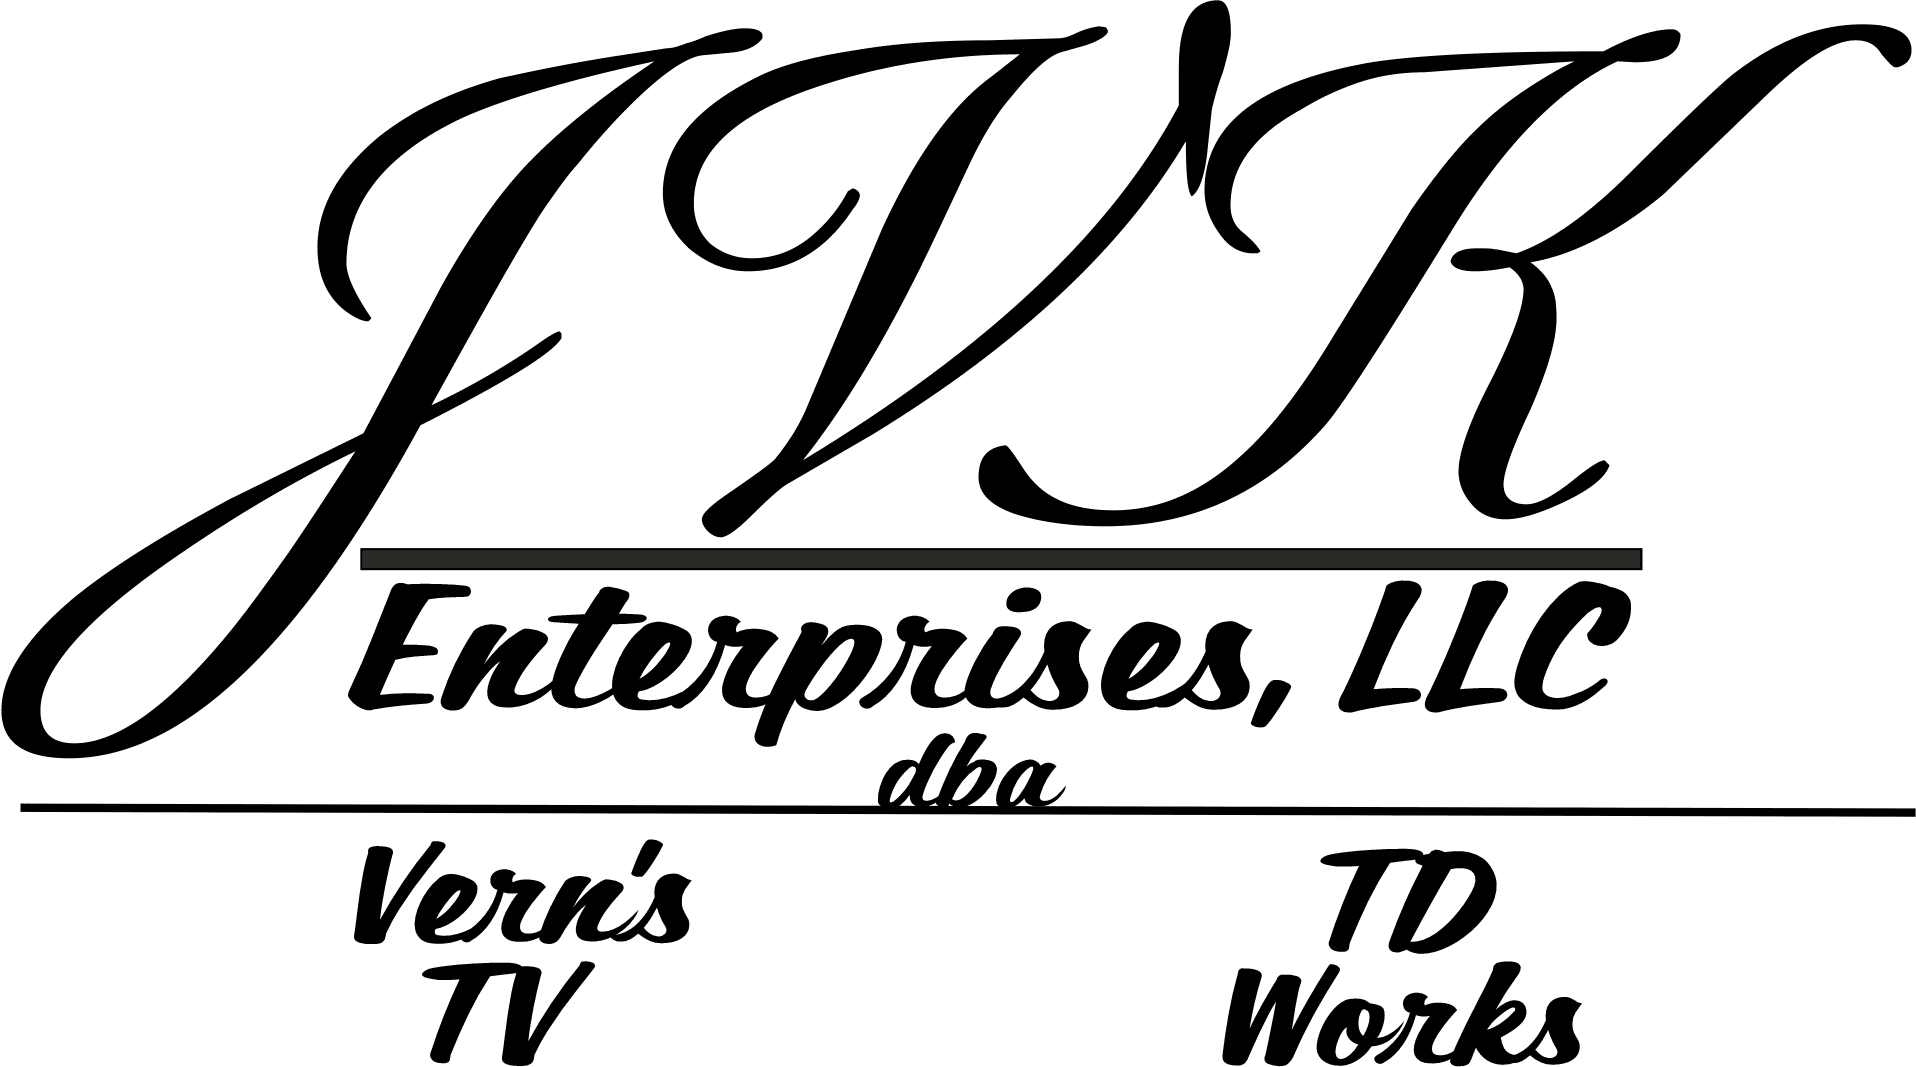 Vern's TV-TD Works